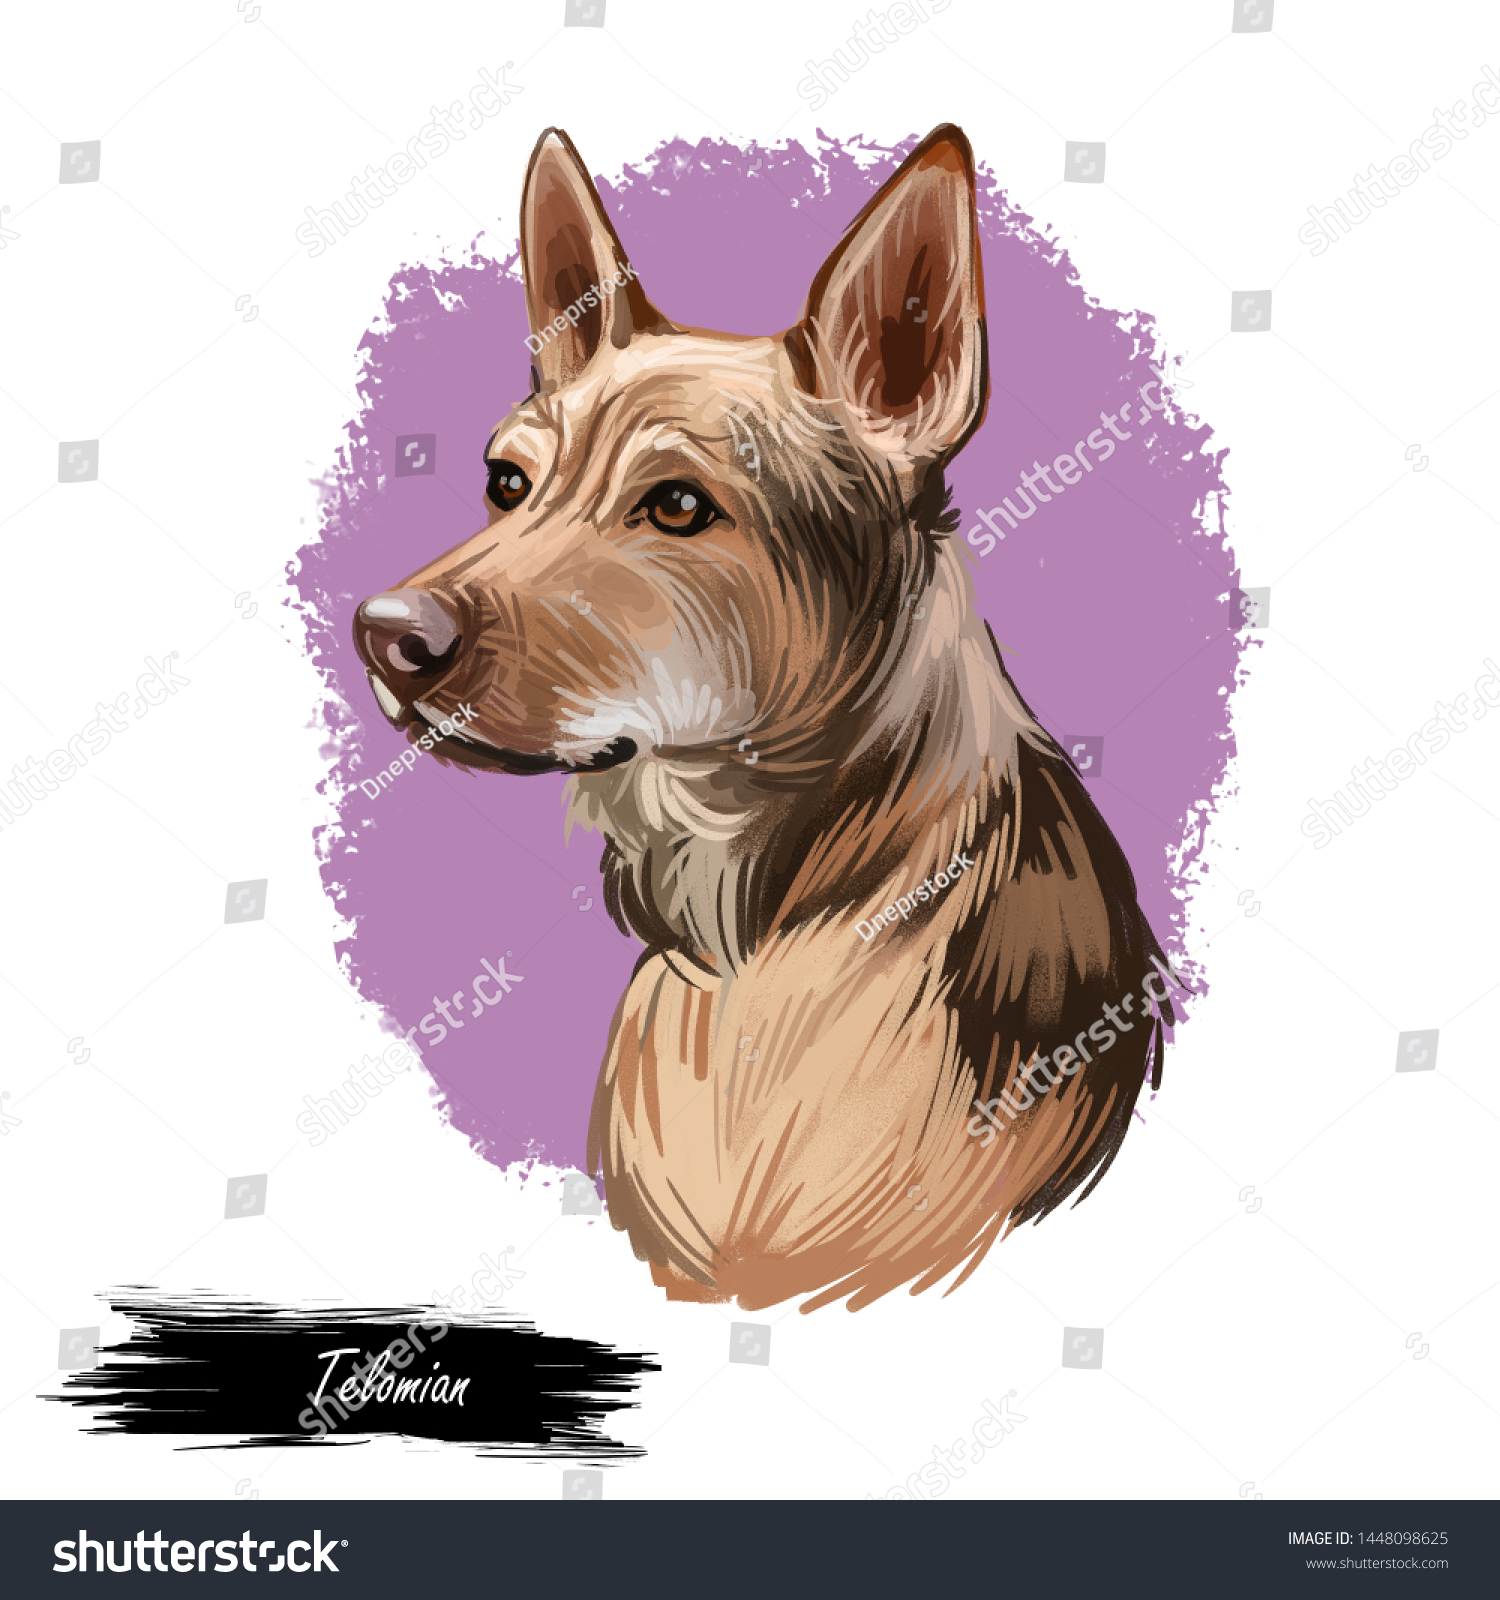 Telomian Breed Dog Native Malaysia Anjing Stock Illustration 1448098625